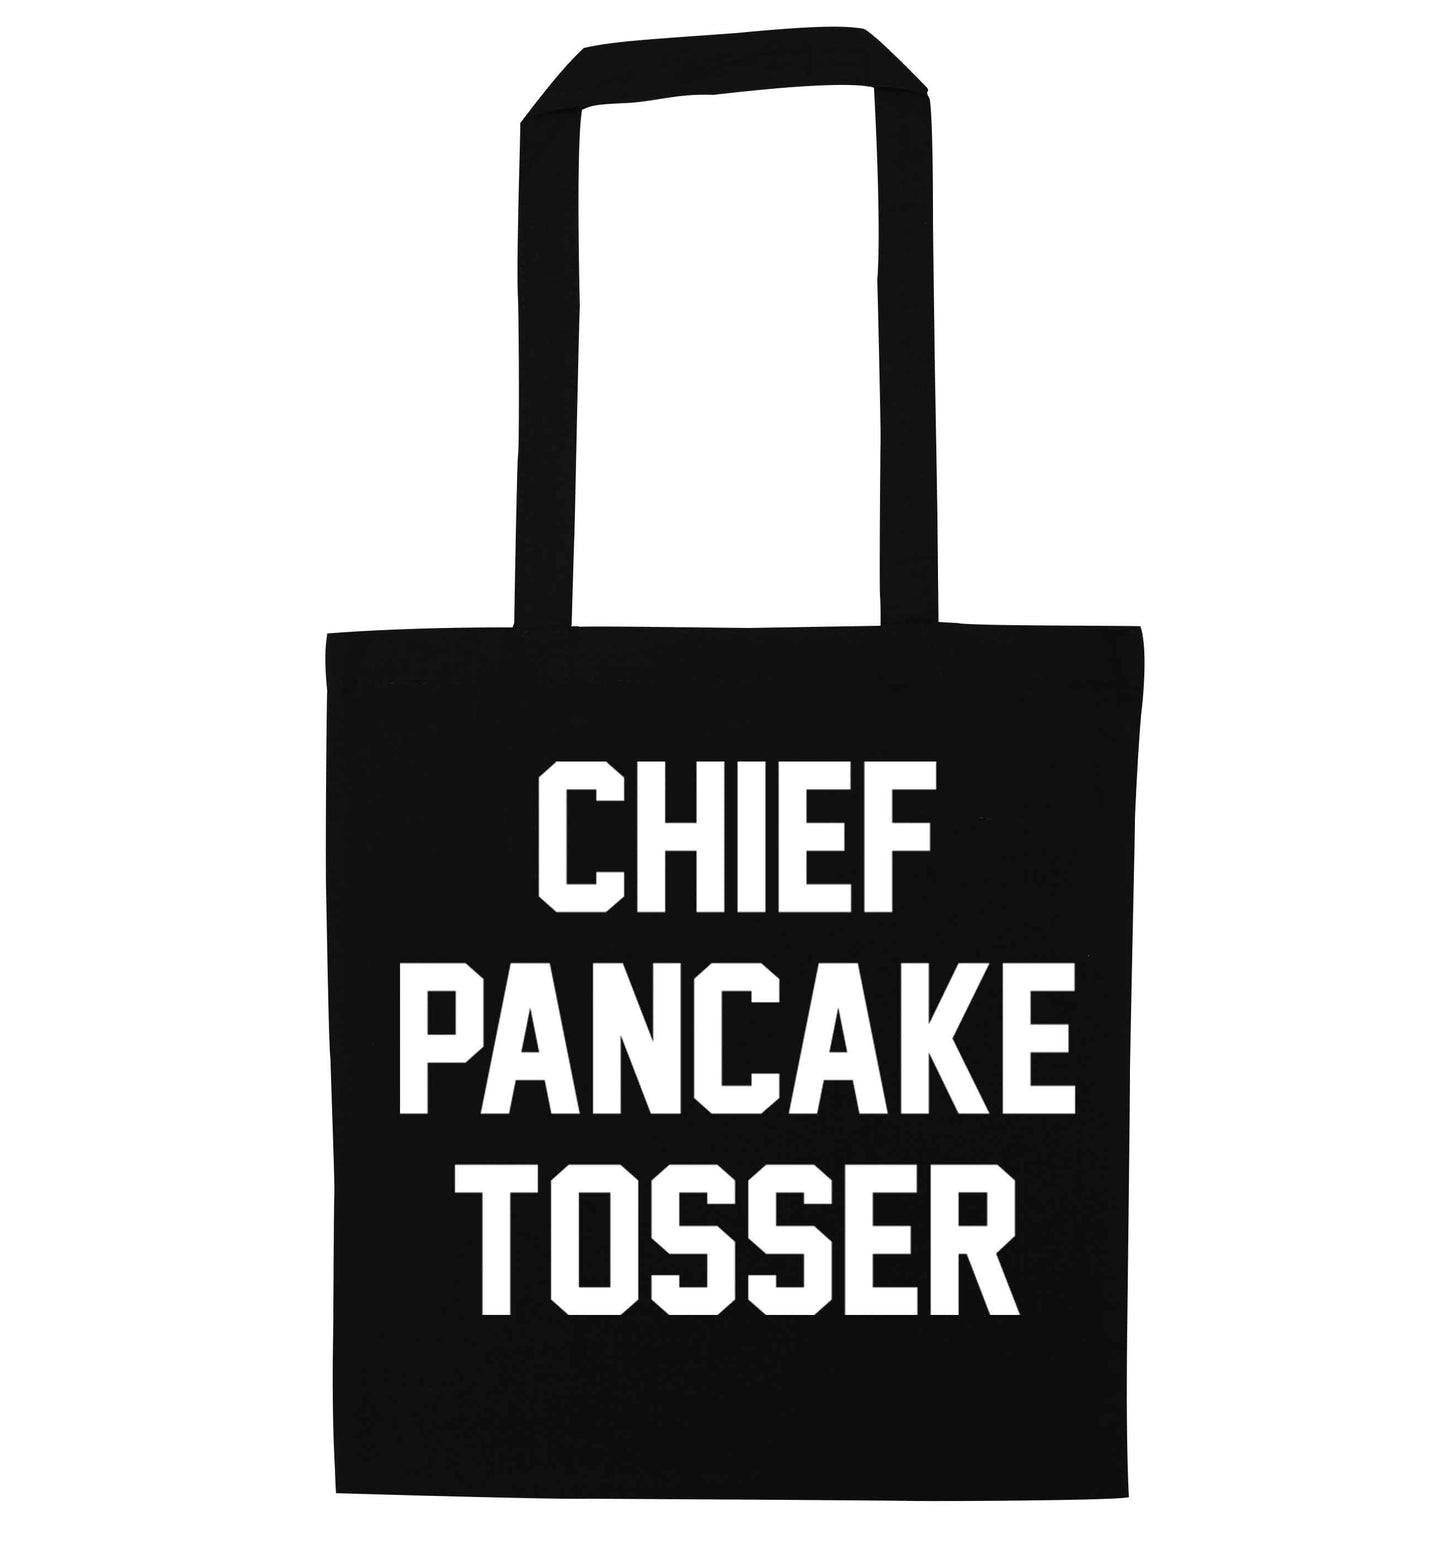 Chief pancake tosser black tote bag